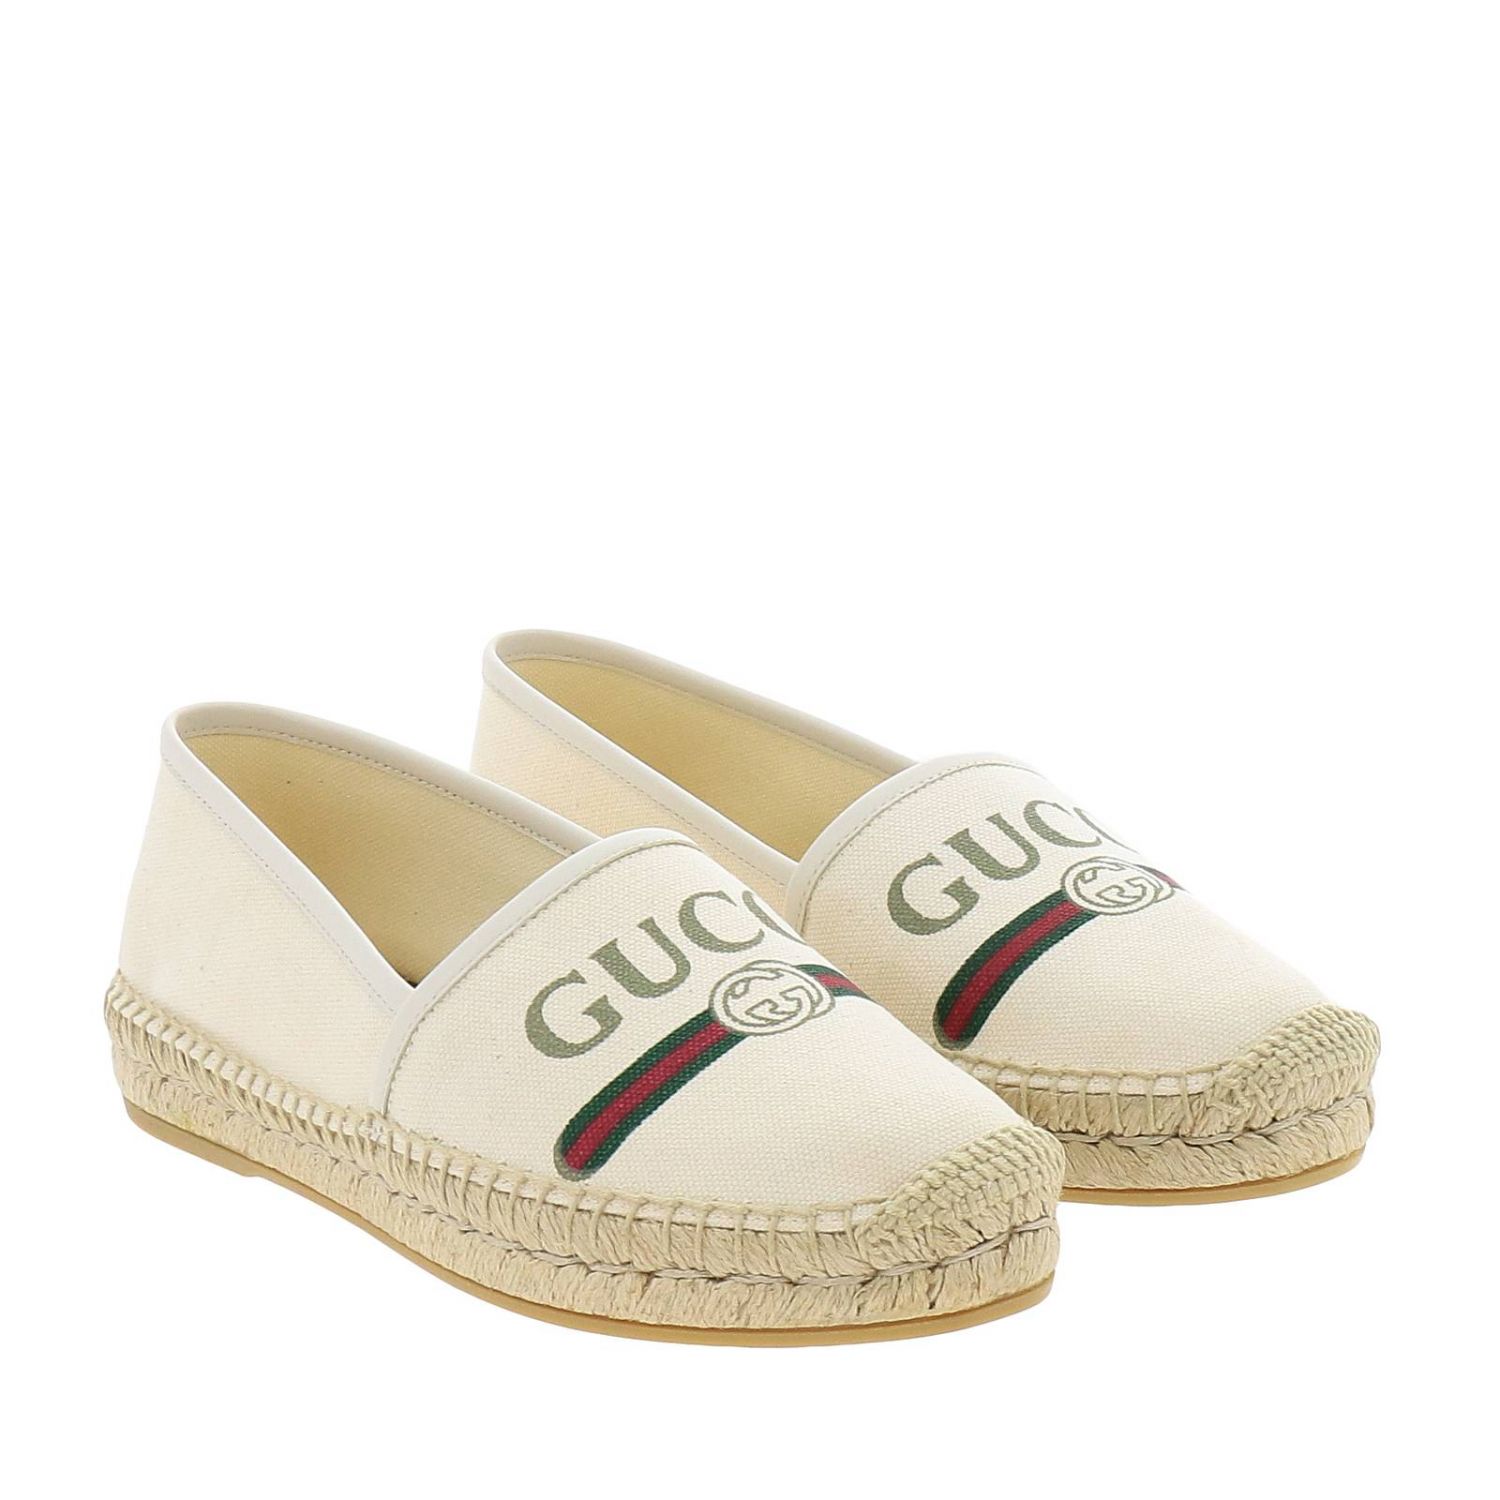 GUCCI: Shoes women | Espadrilles Gucci Women Yellow Cream | Espadrilles ...